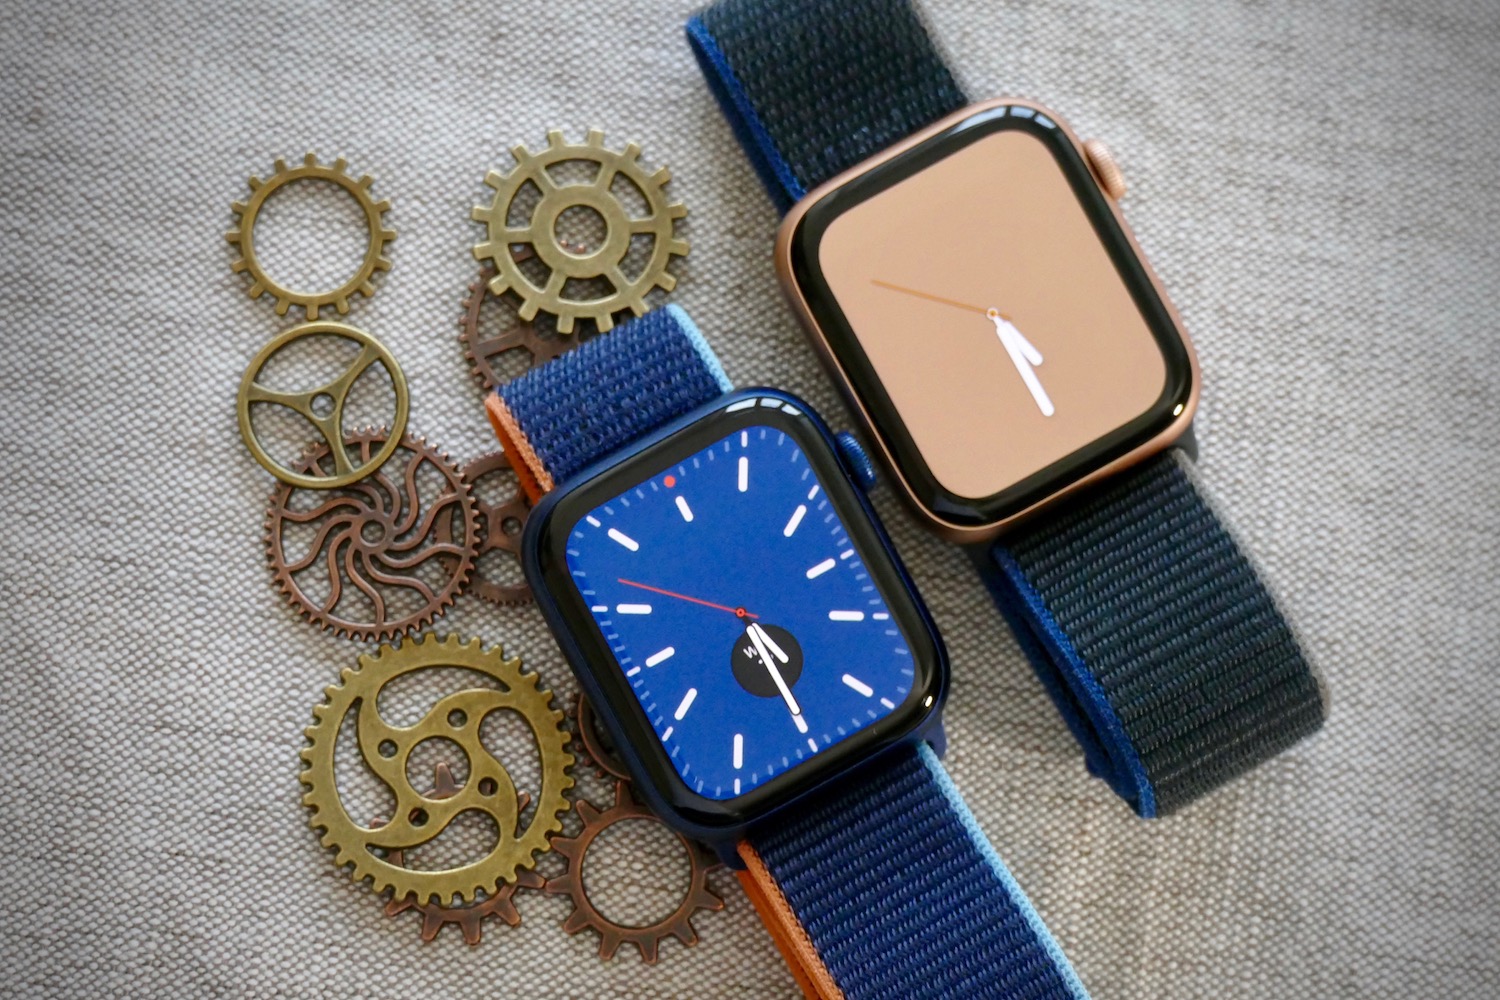 Apple Watch Series 6 e Apple Watch SE lado a lado.